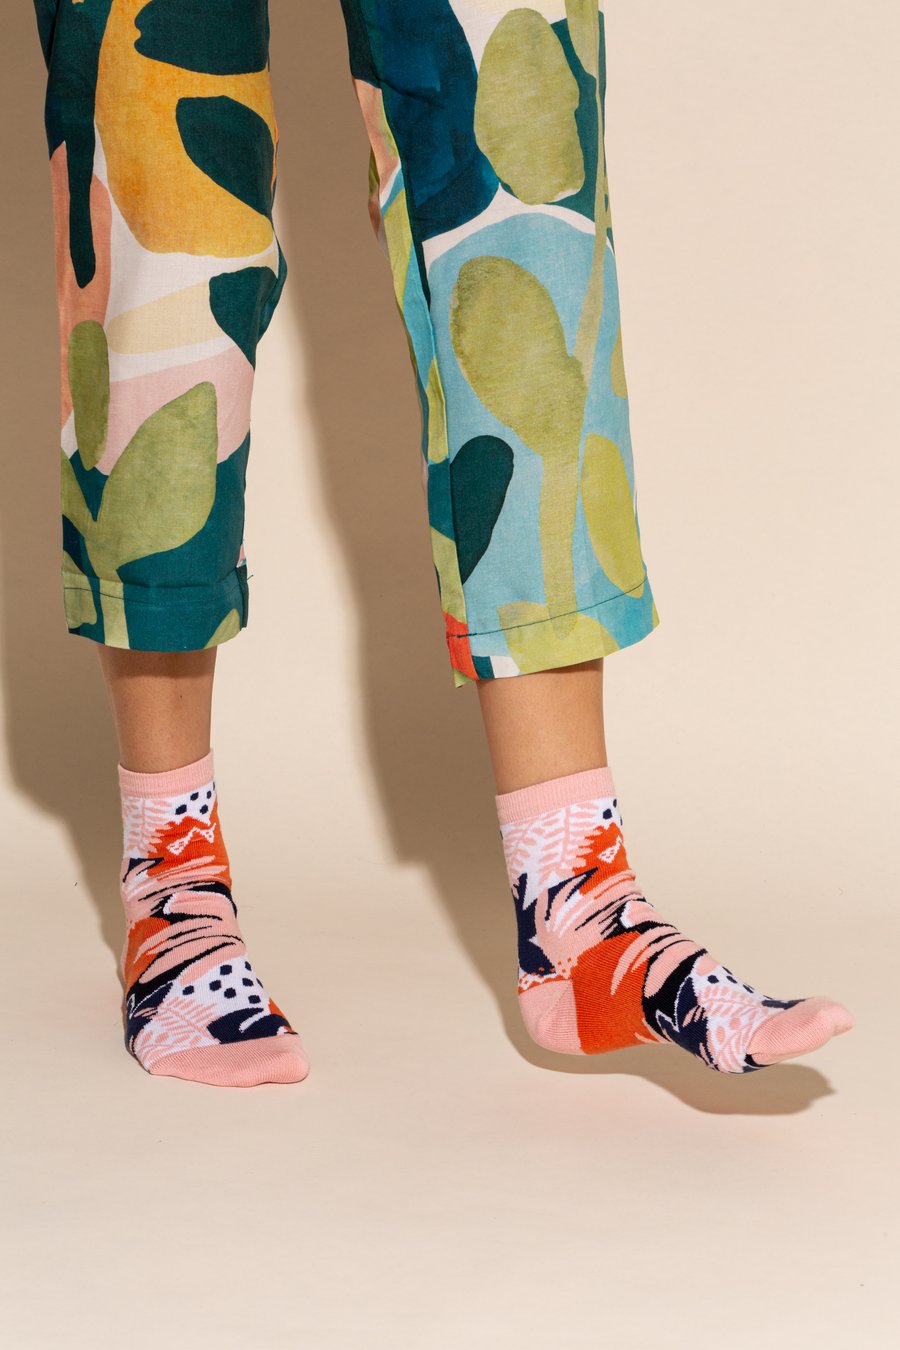 Cute Socks - via wallflower